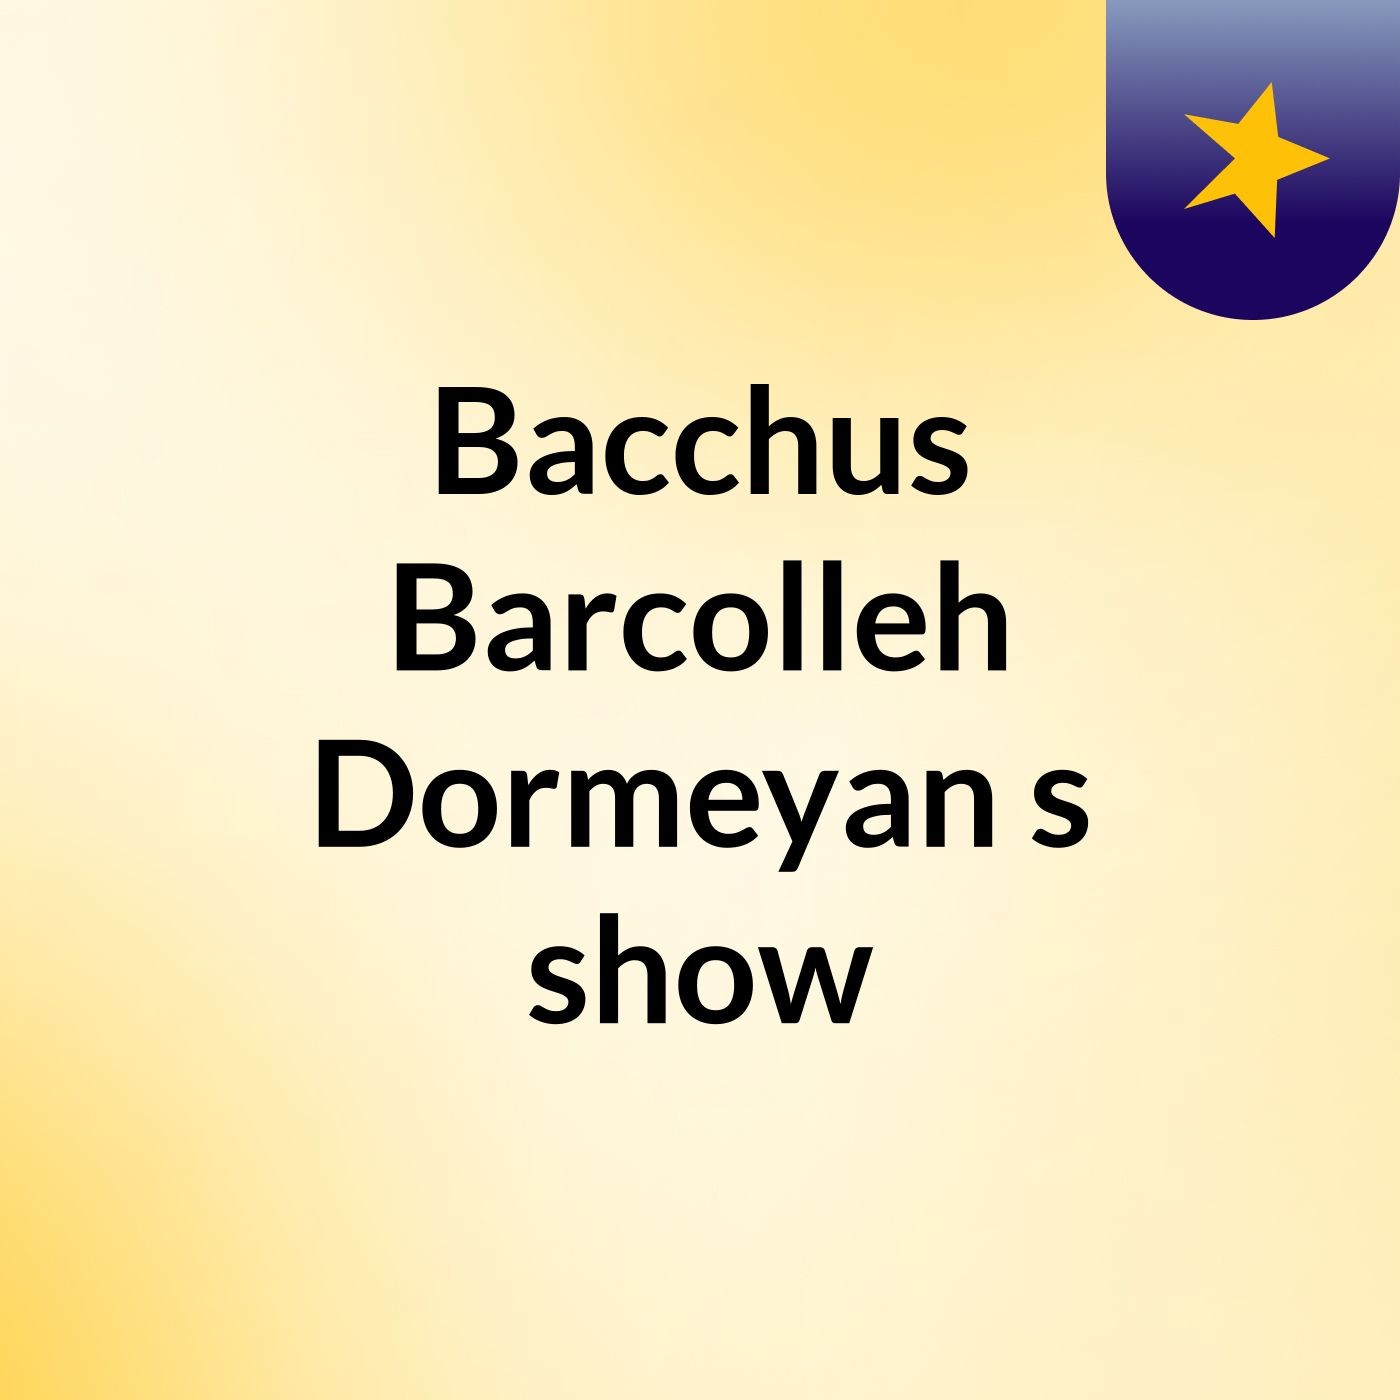 Episode 2 - Bacchus Barcolleh Dormeyan's show